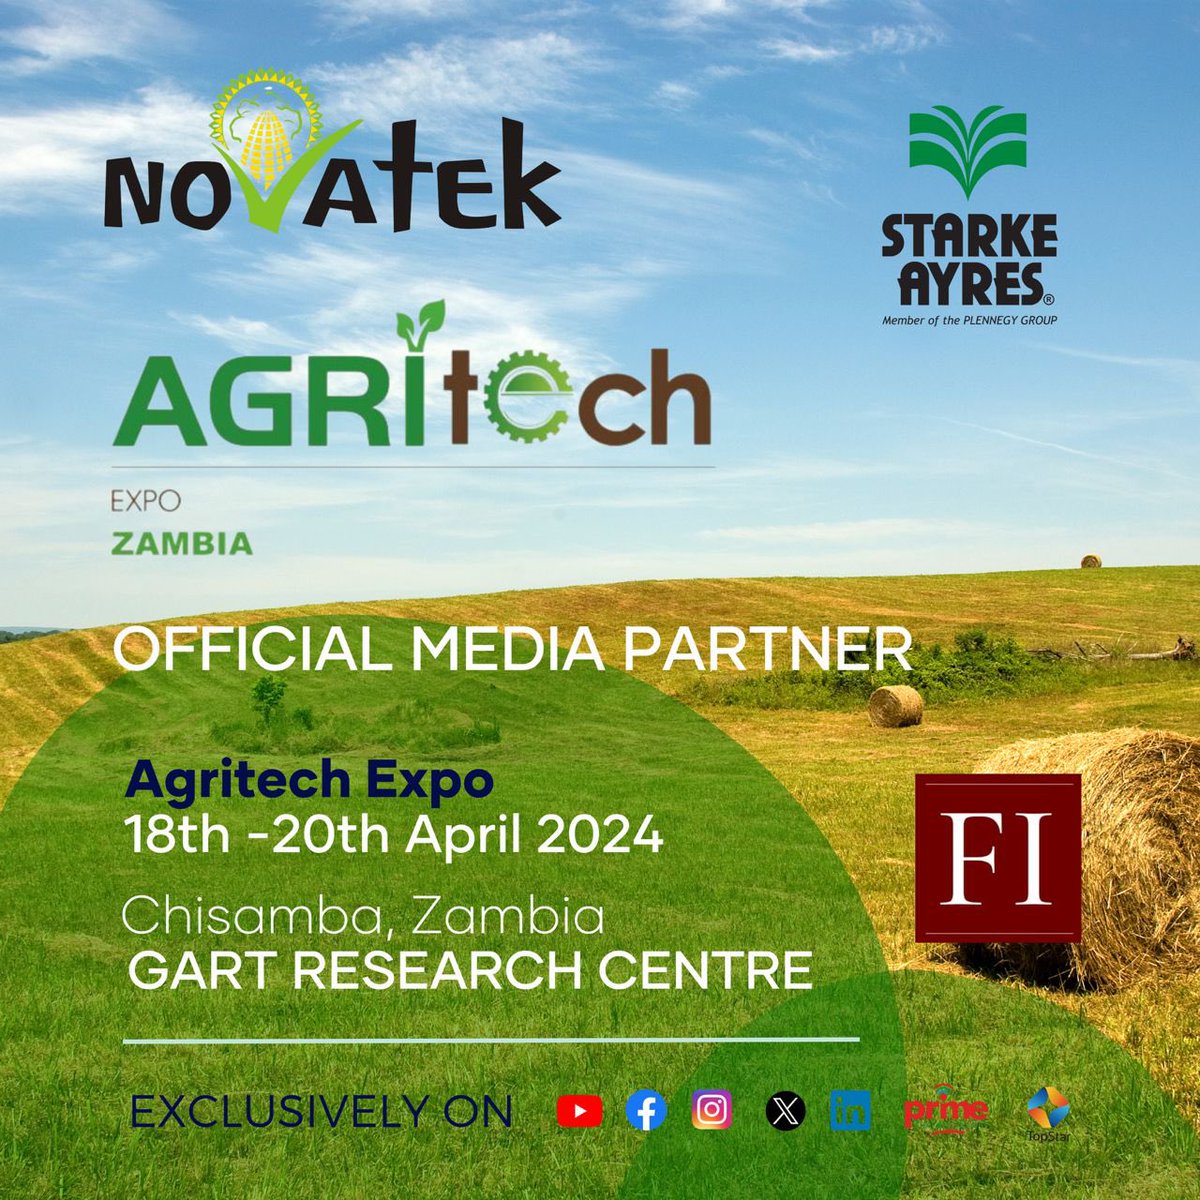 Here we go!!!

#AgritechExpo #FinancialInsight #MediaPartners #StarkeAyres #Novatek